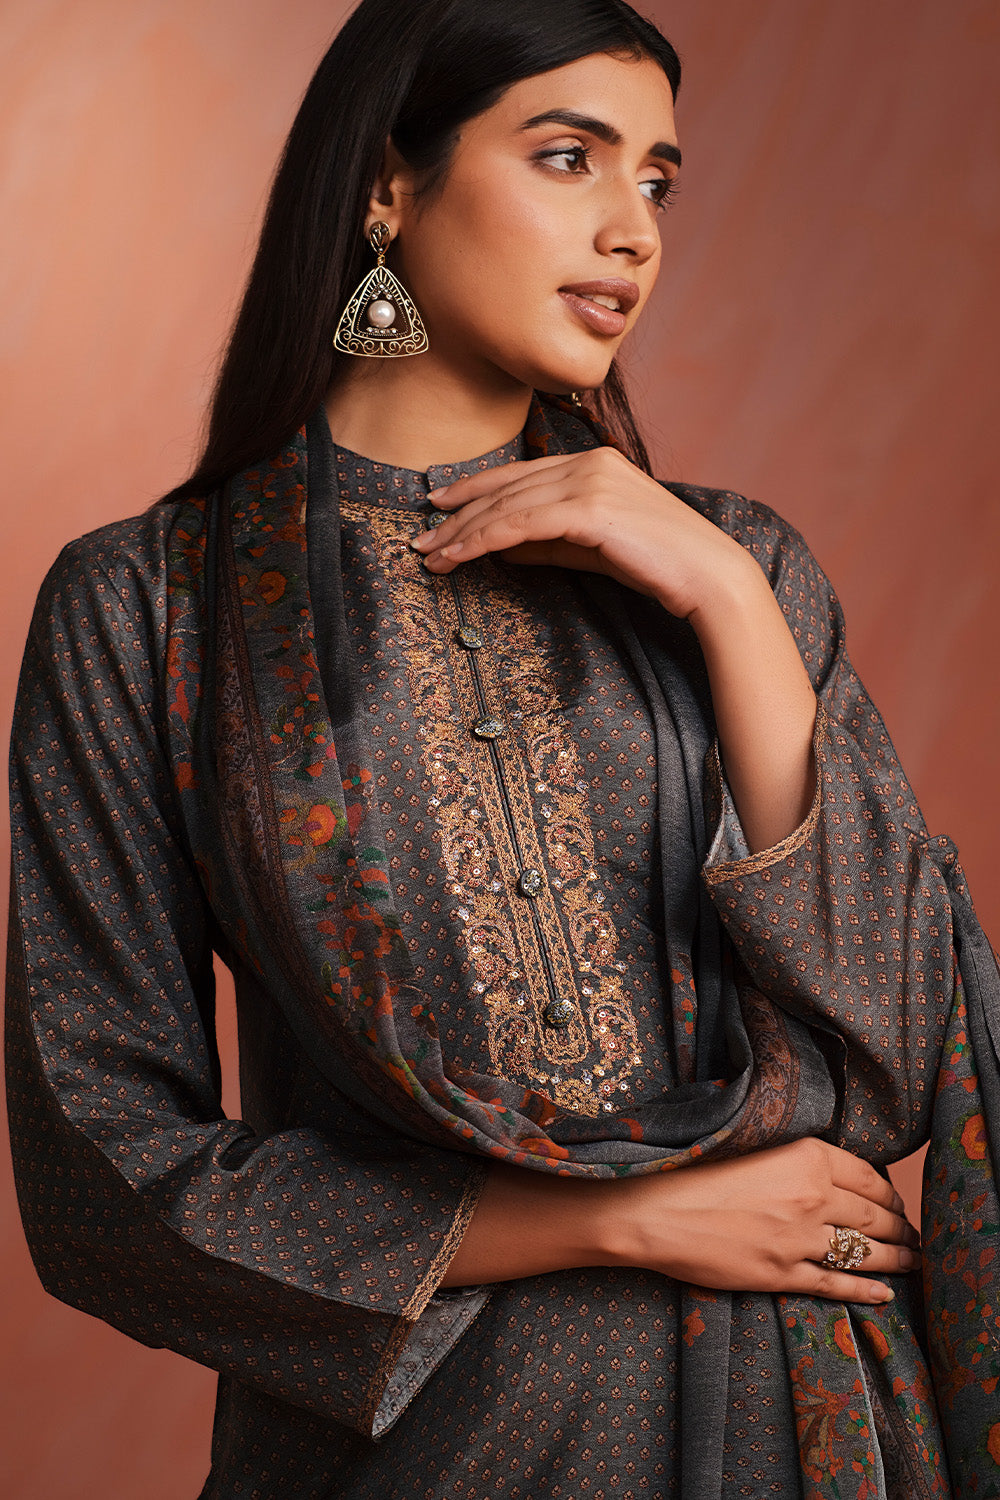 Grey Colour Printed Pashmina Unstitched Suit Fabric